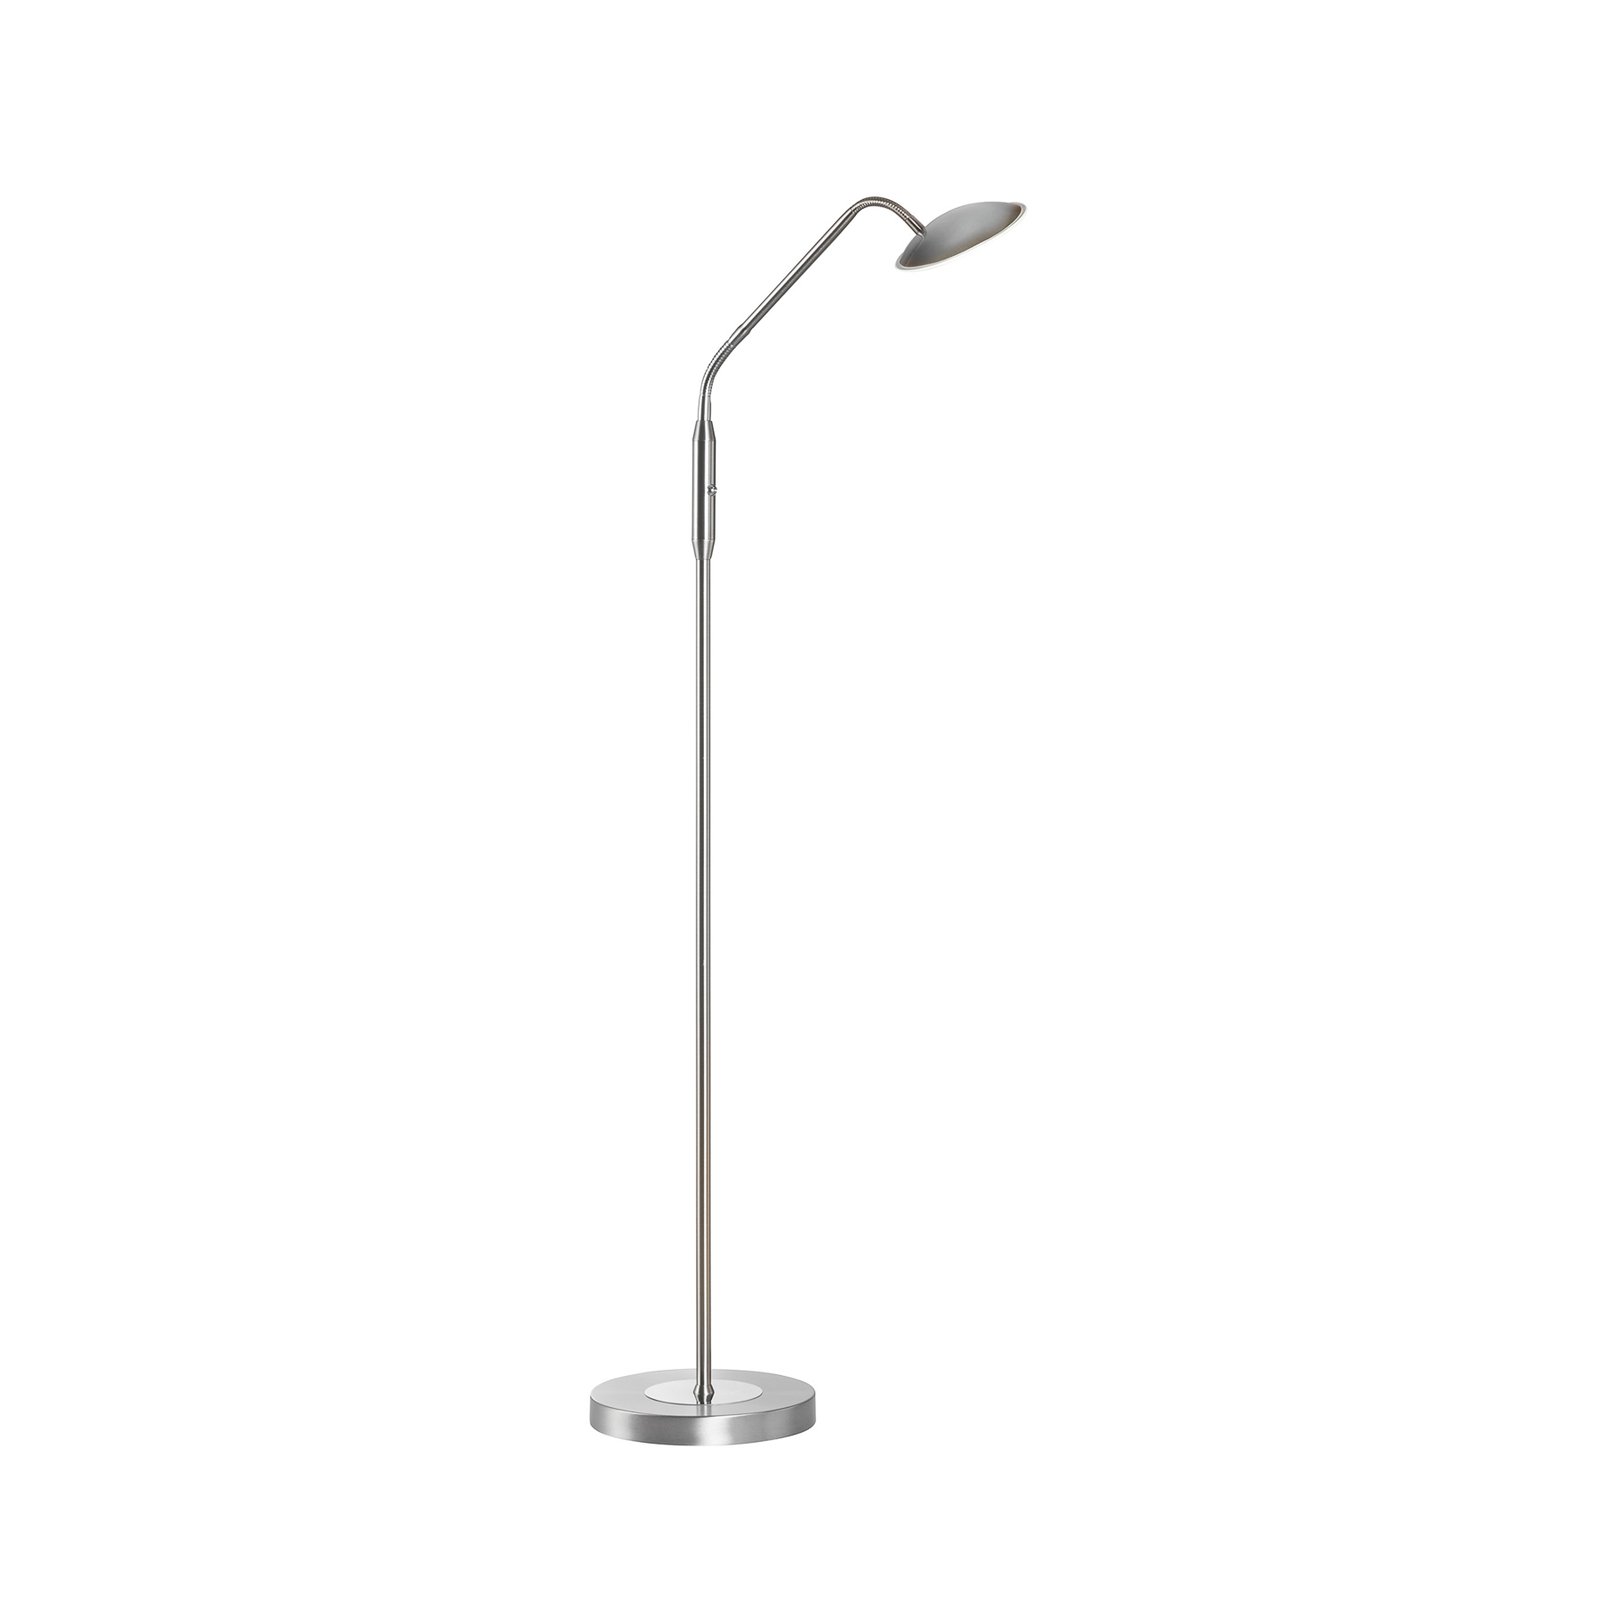 Stojací lampa LED Tallri, barva niklu, výška 135 cm, CCT